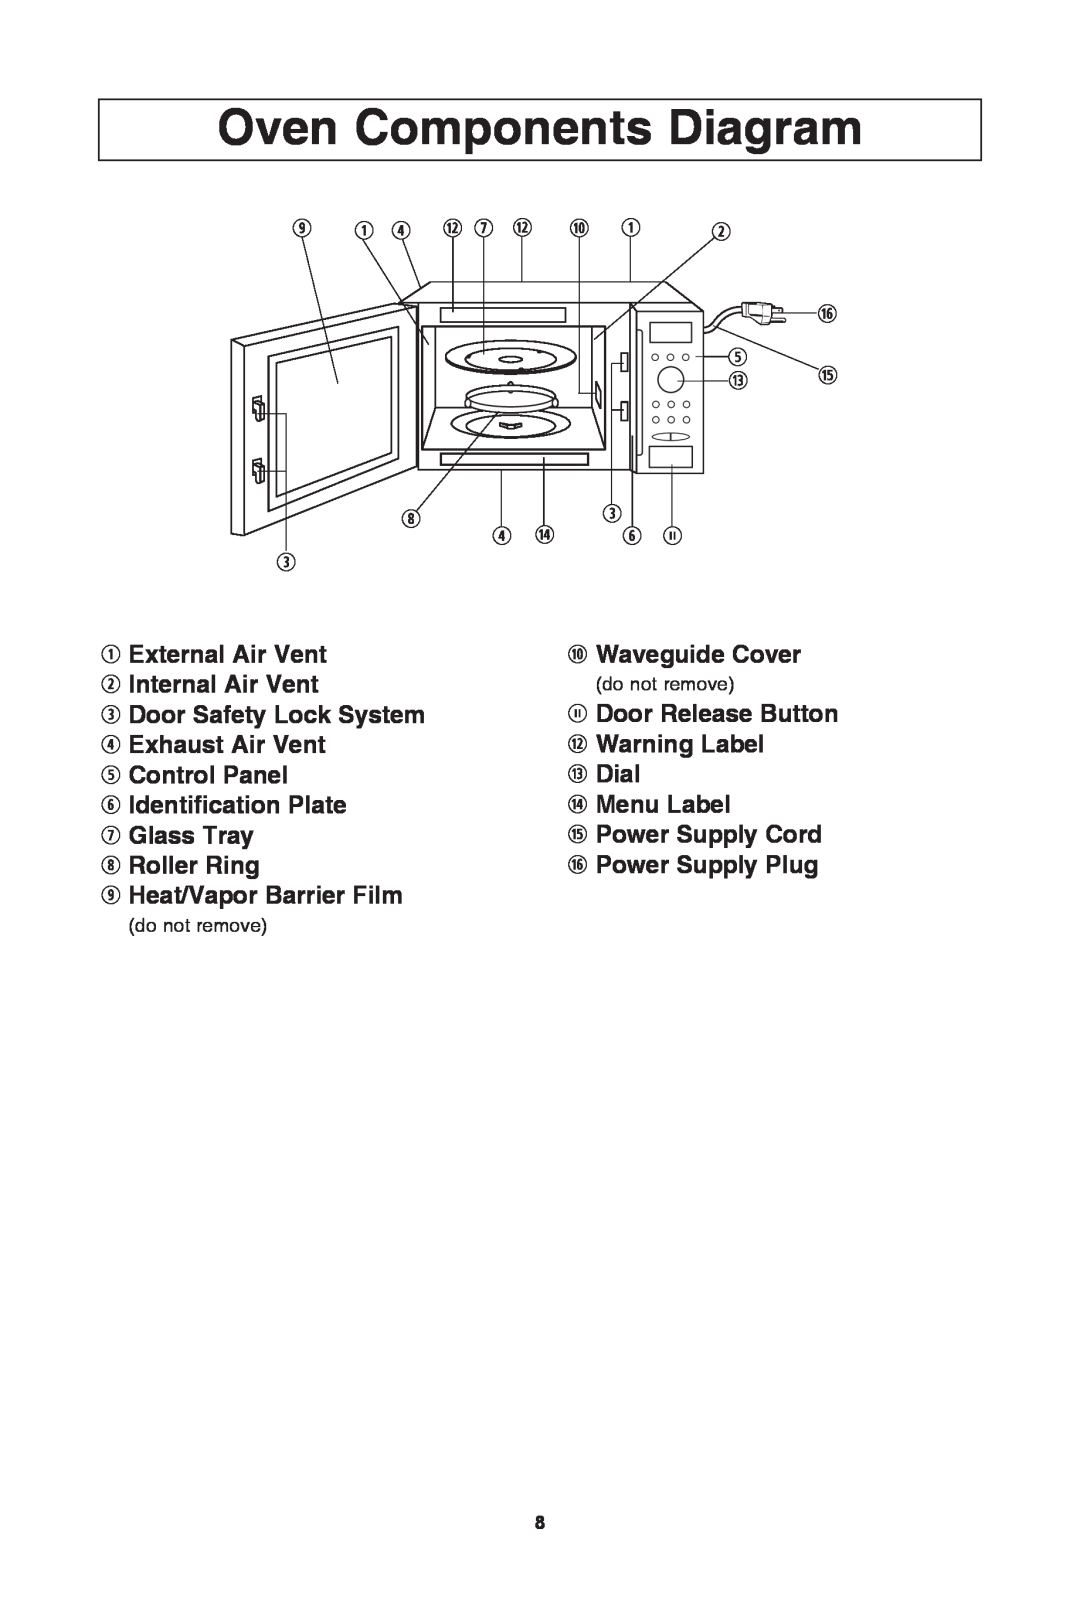 Panasonic NN-SD972S oven components diagram, q external air vent w internal air vent, t control Panel, a Waveguide cover 